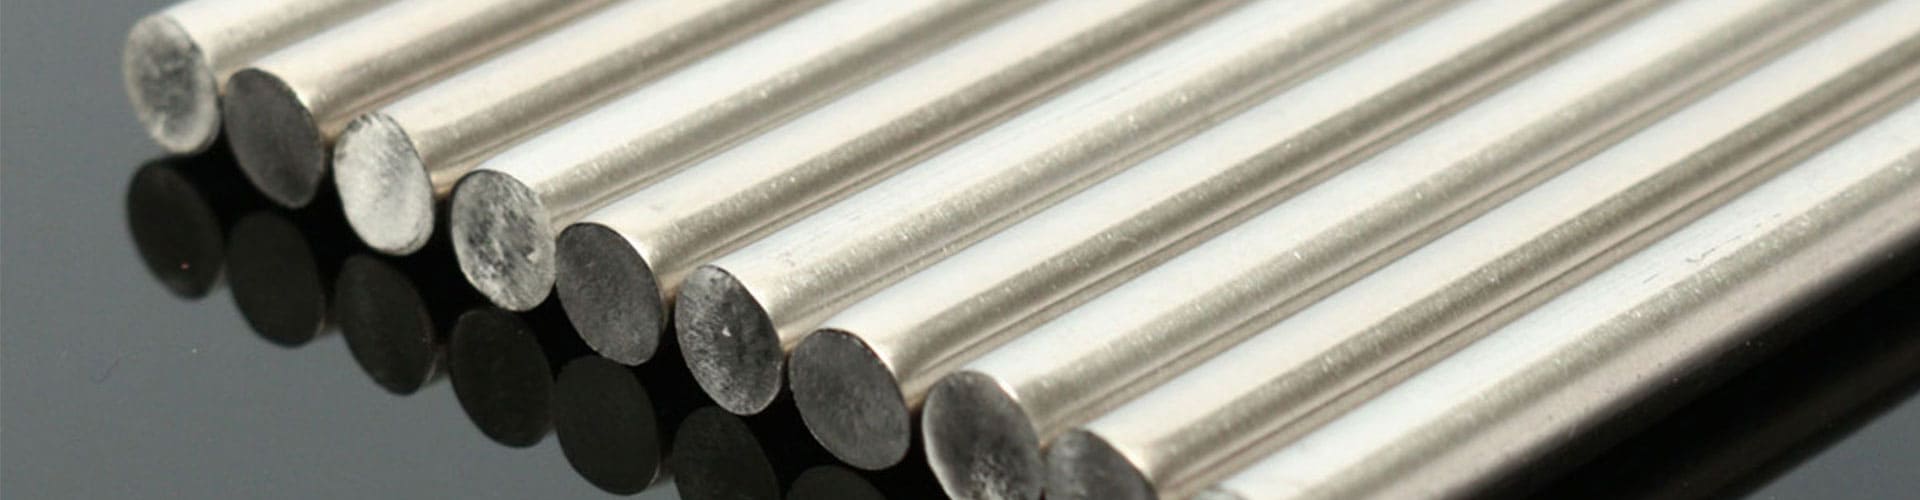 nickel-alloy-201-round-bars-rods-manufacturer-exporter-supplier-in-poland